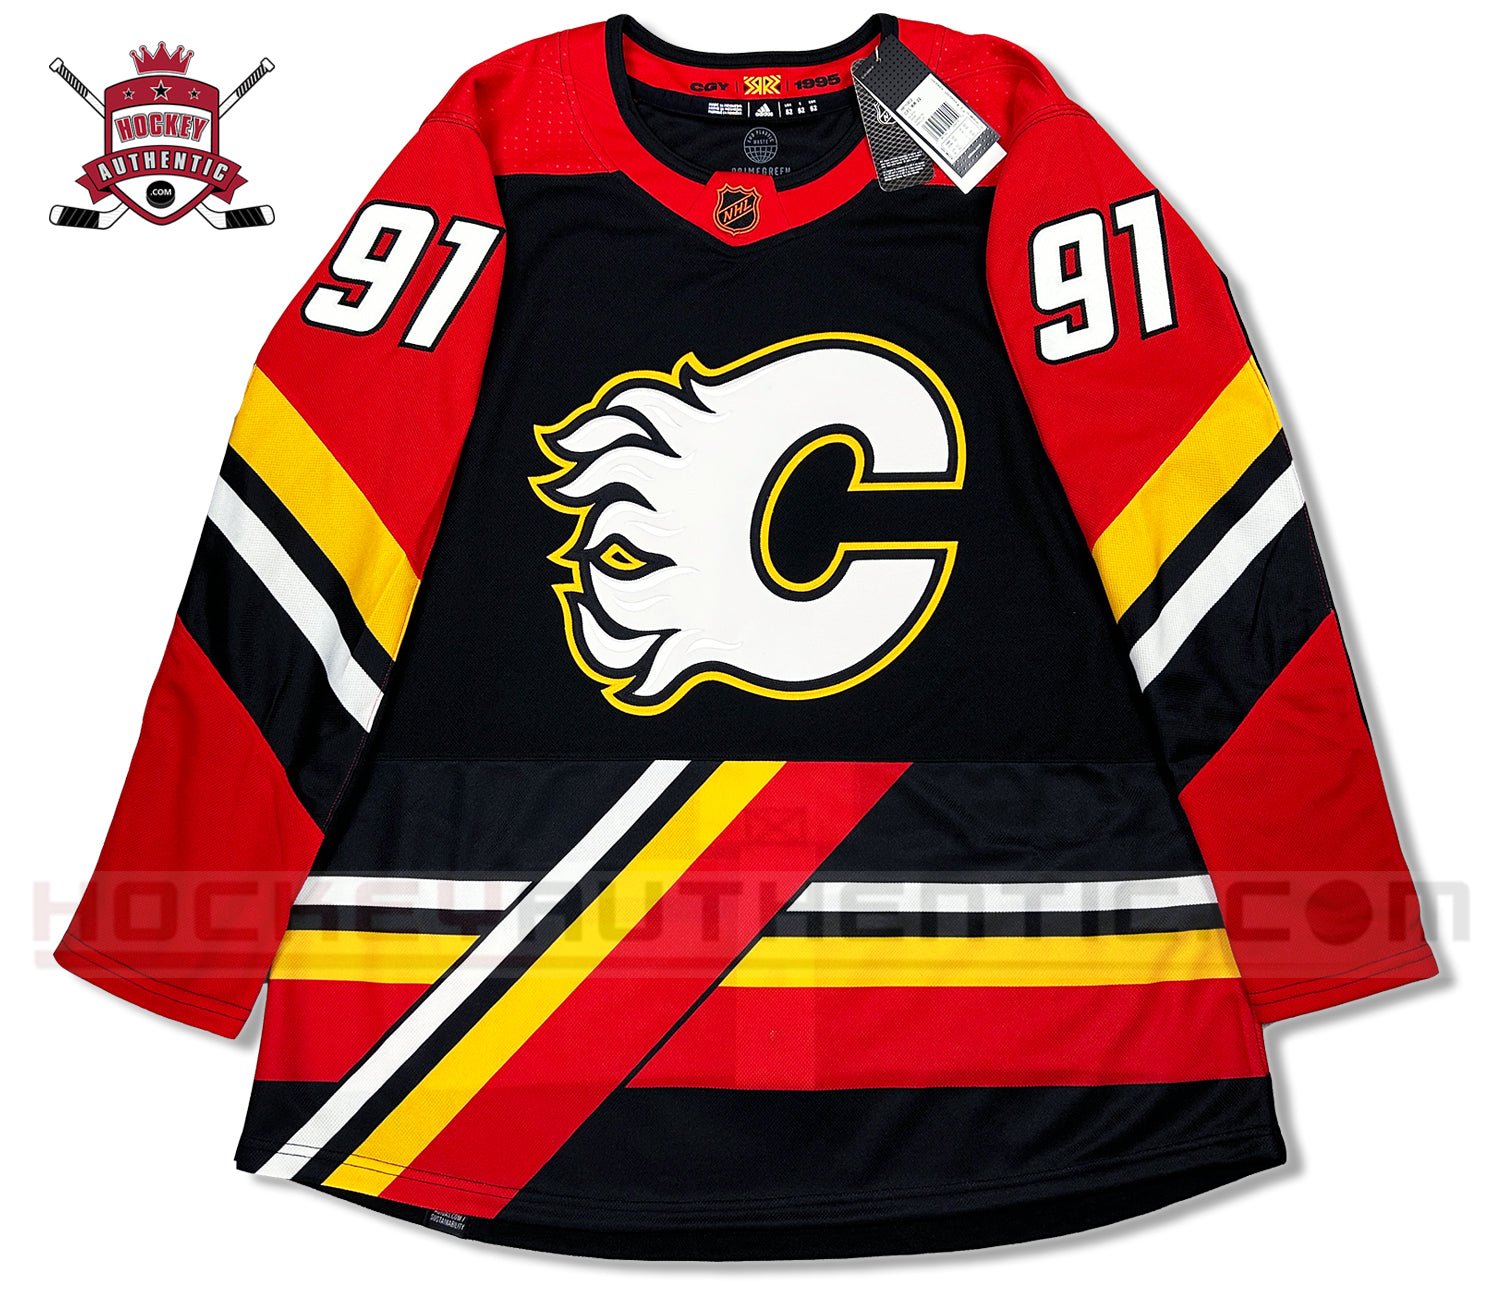 Adidas Calgary Flames NHL Jersey Red Mens Size 50(Medium